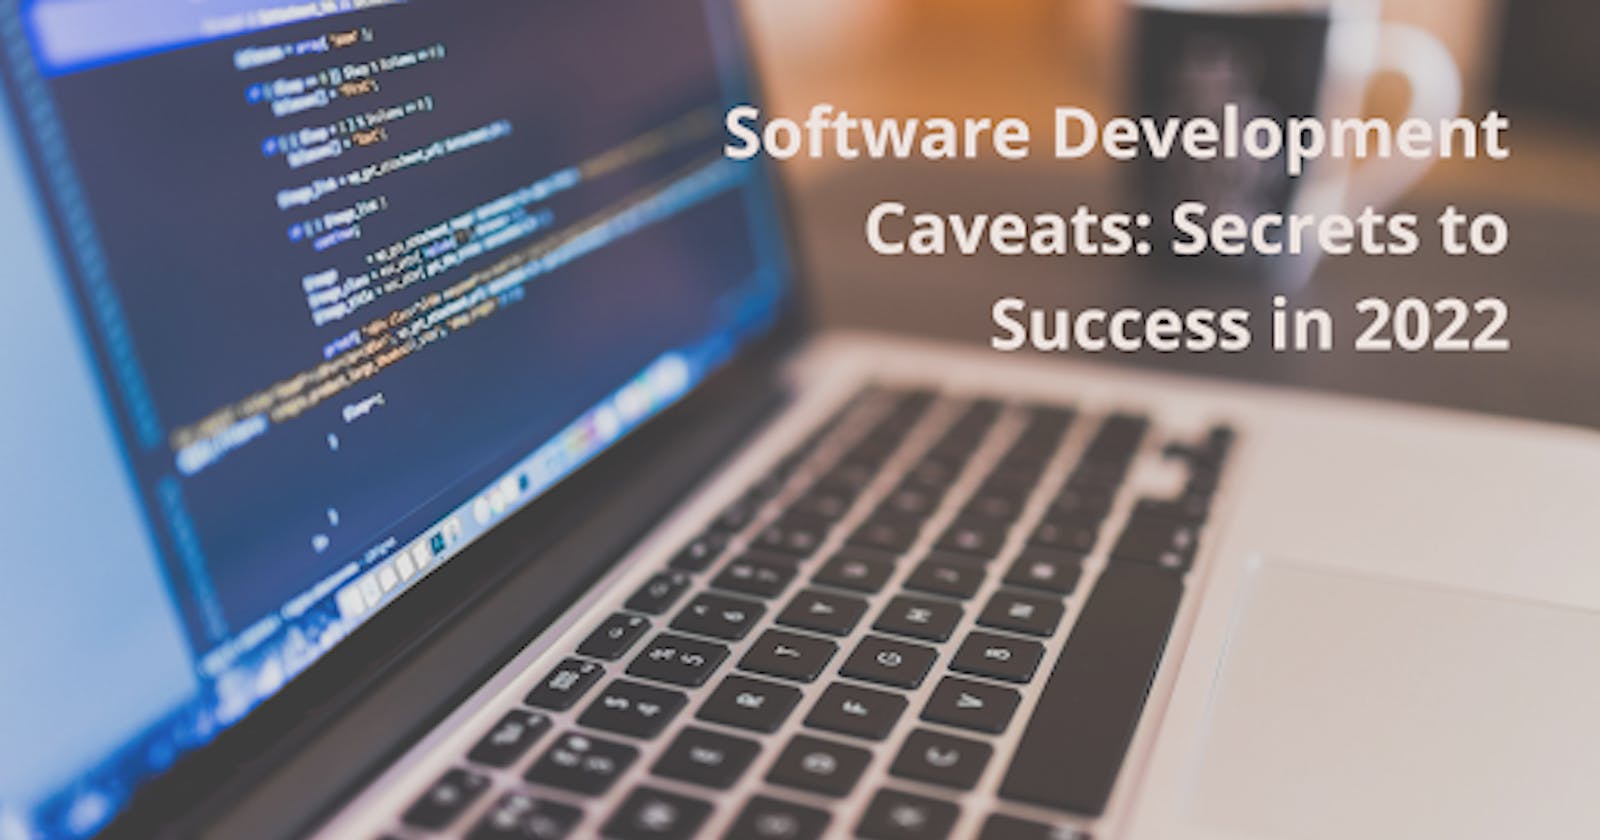 Software Development Caveats: Secrets to Success in 2022